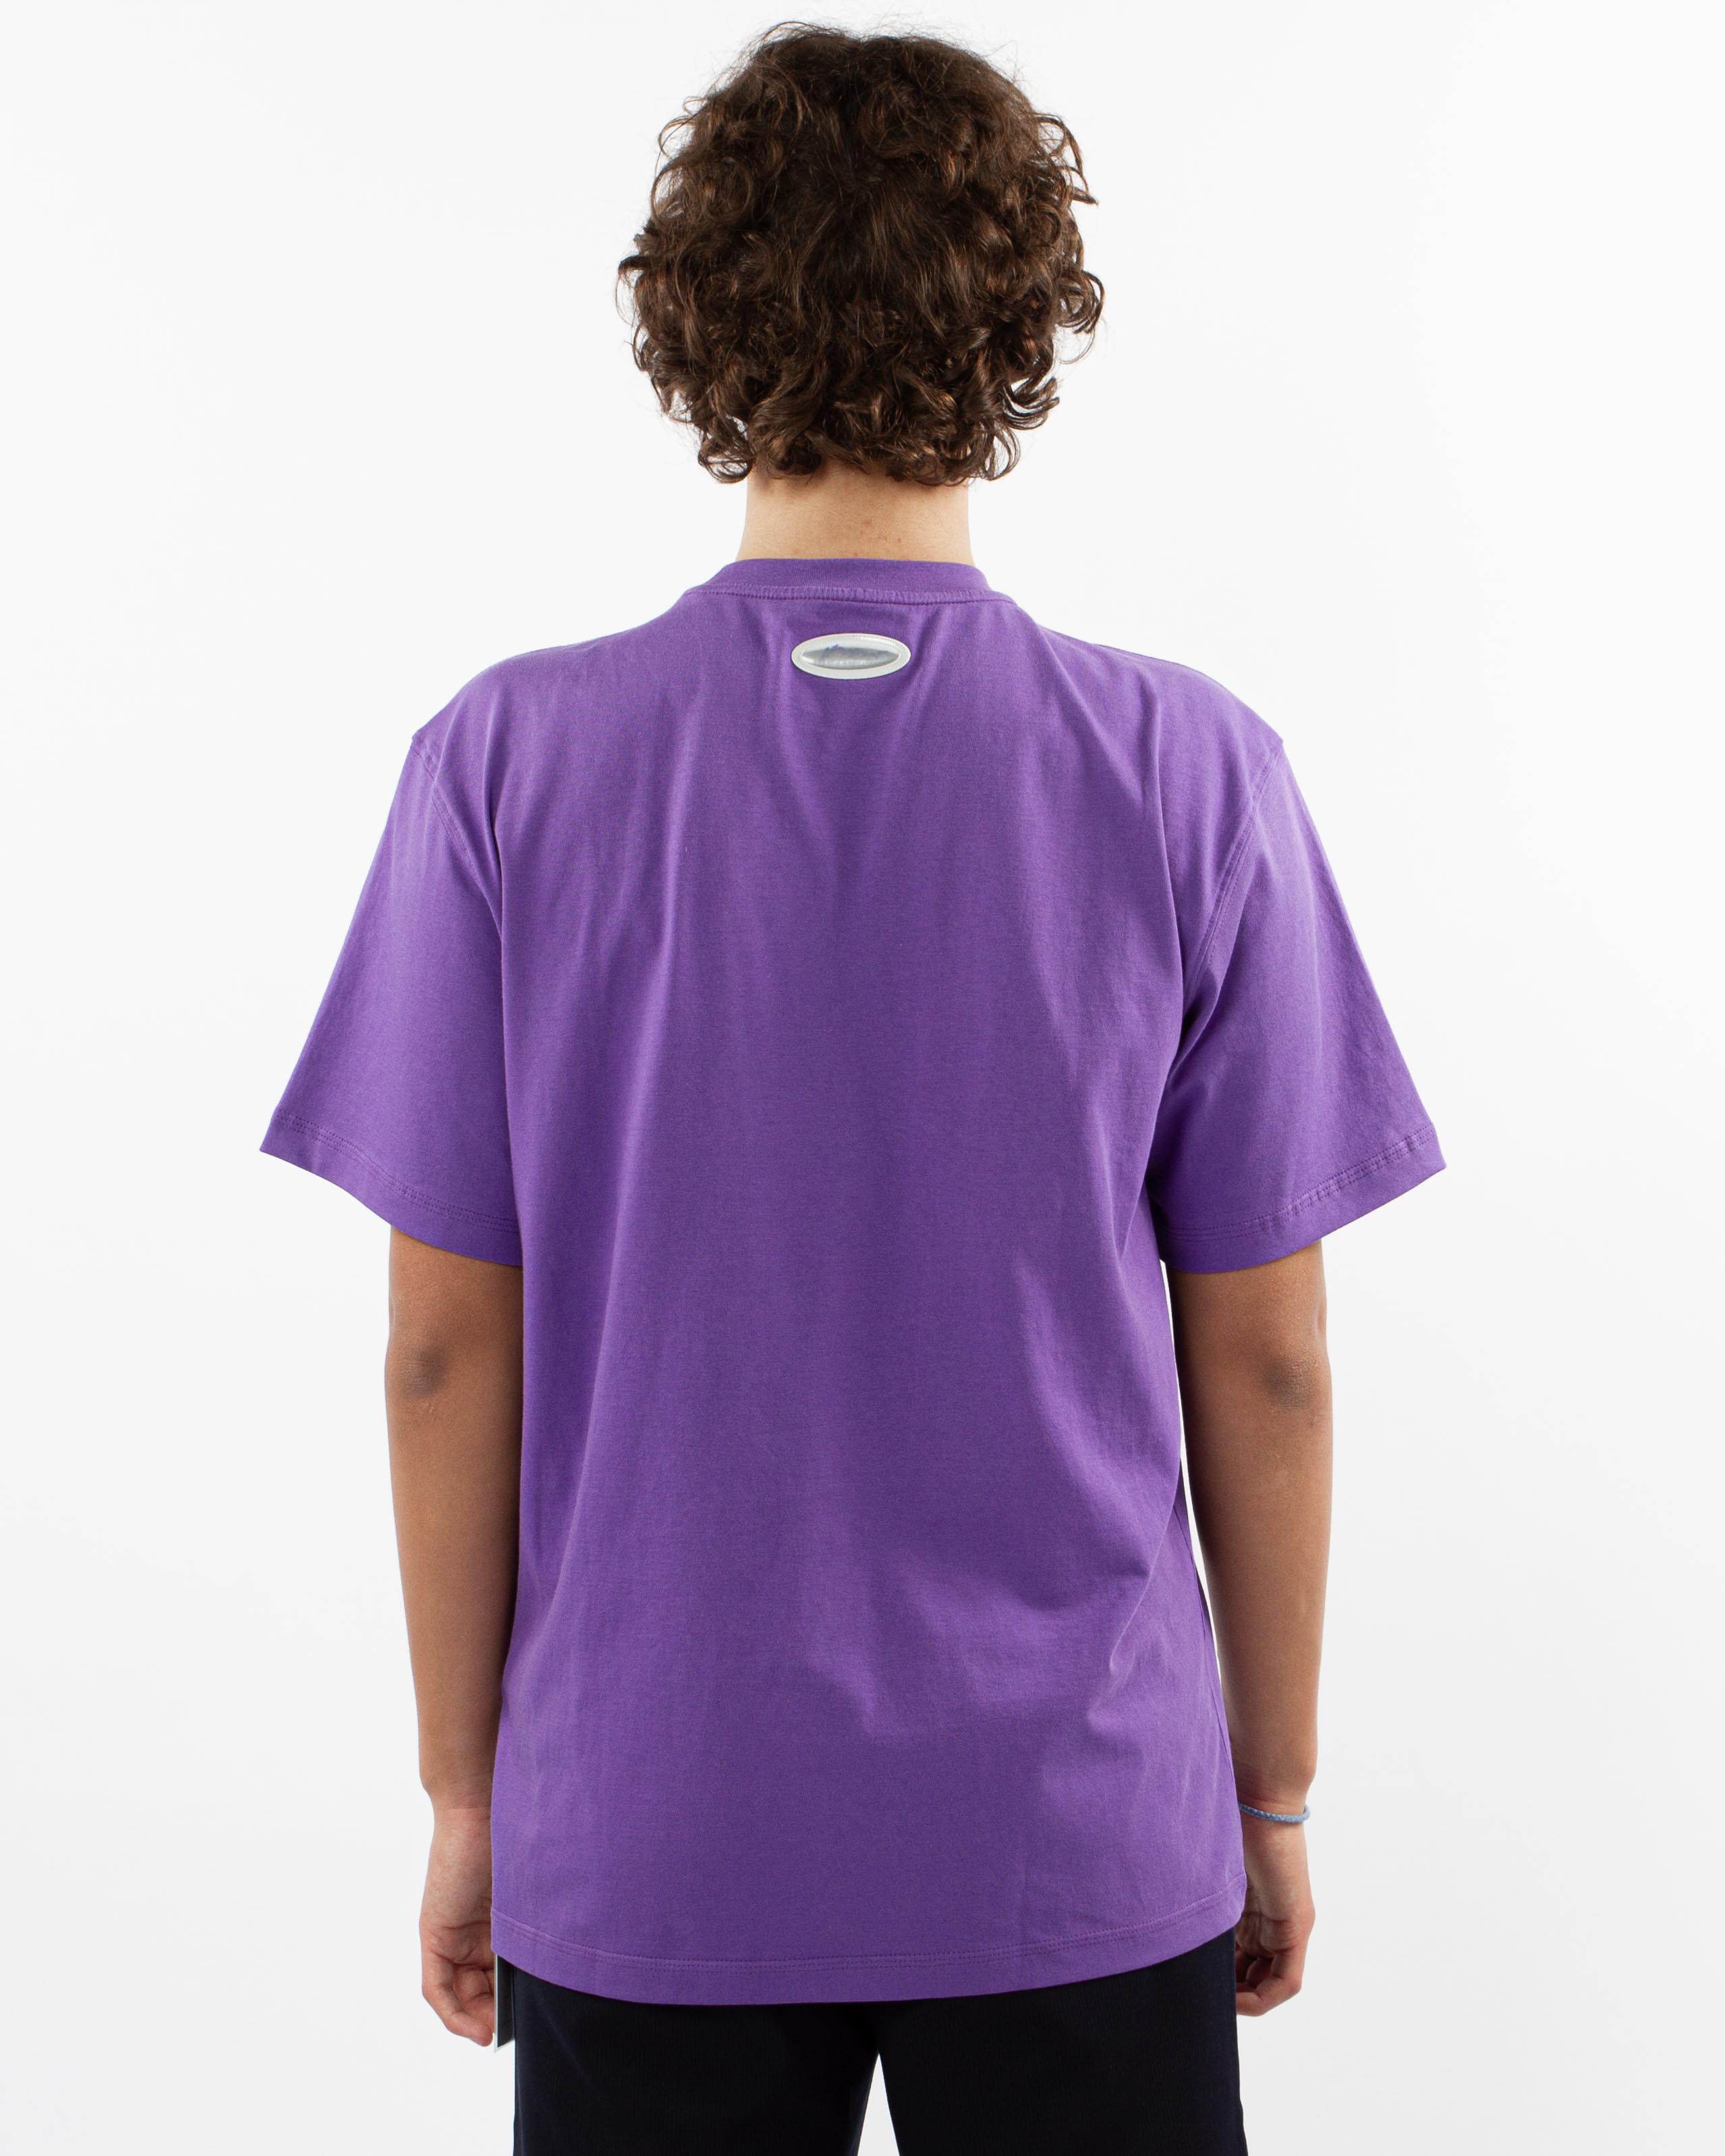 Invader T-shirt Ader Error Tops T-Shirts Purple